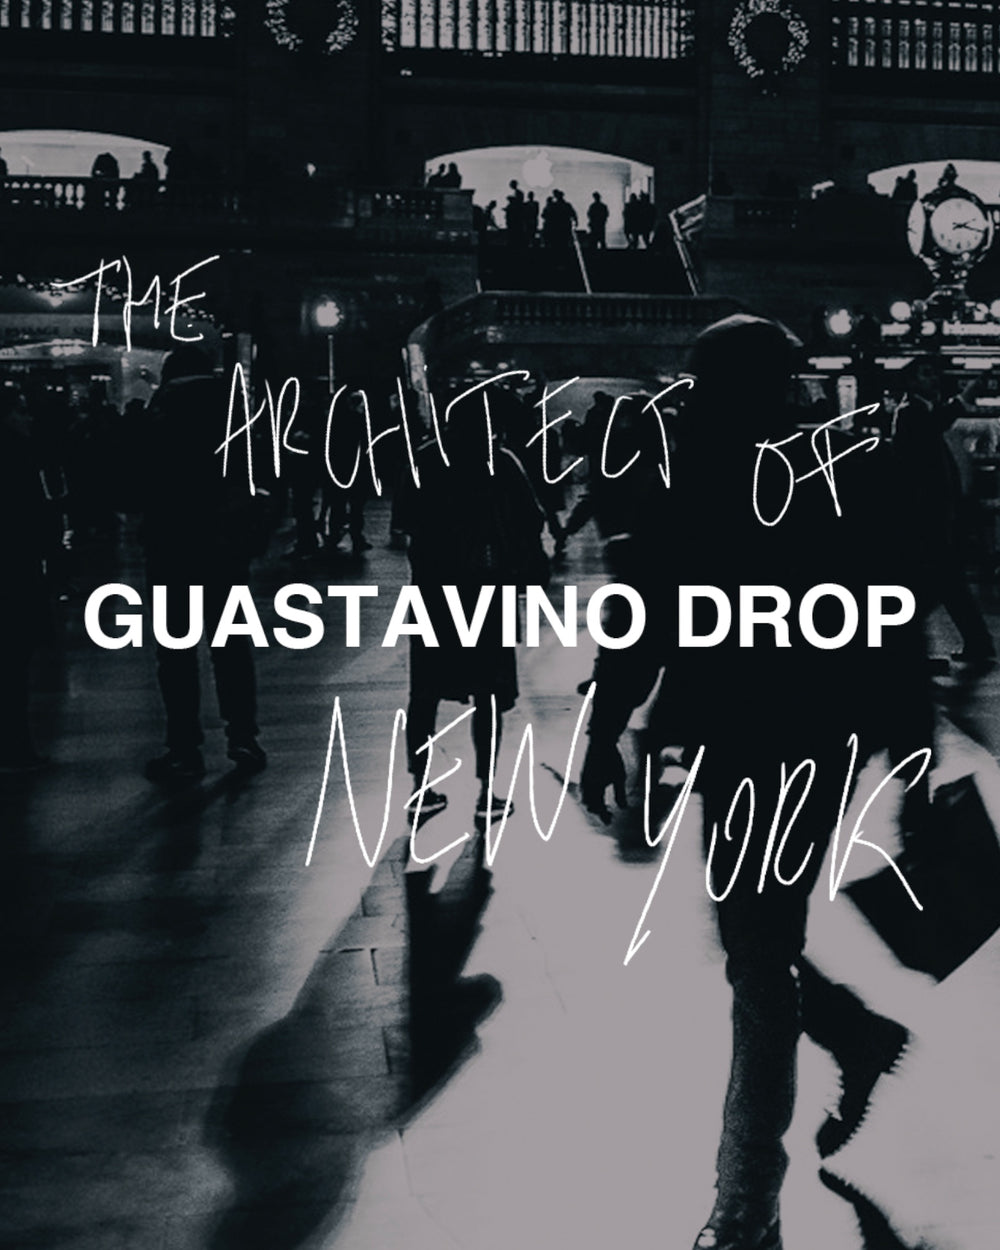 Guastavino Drop